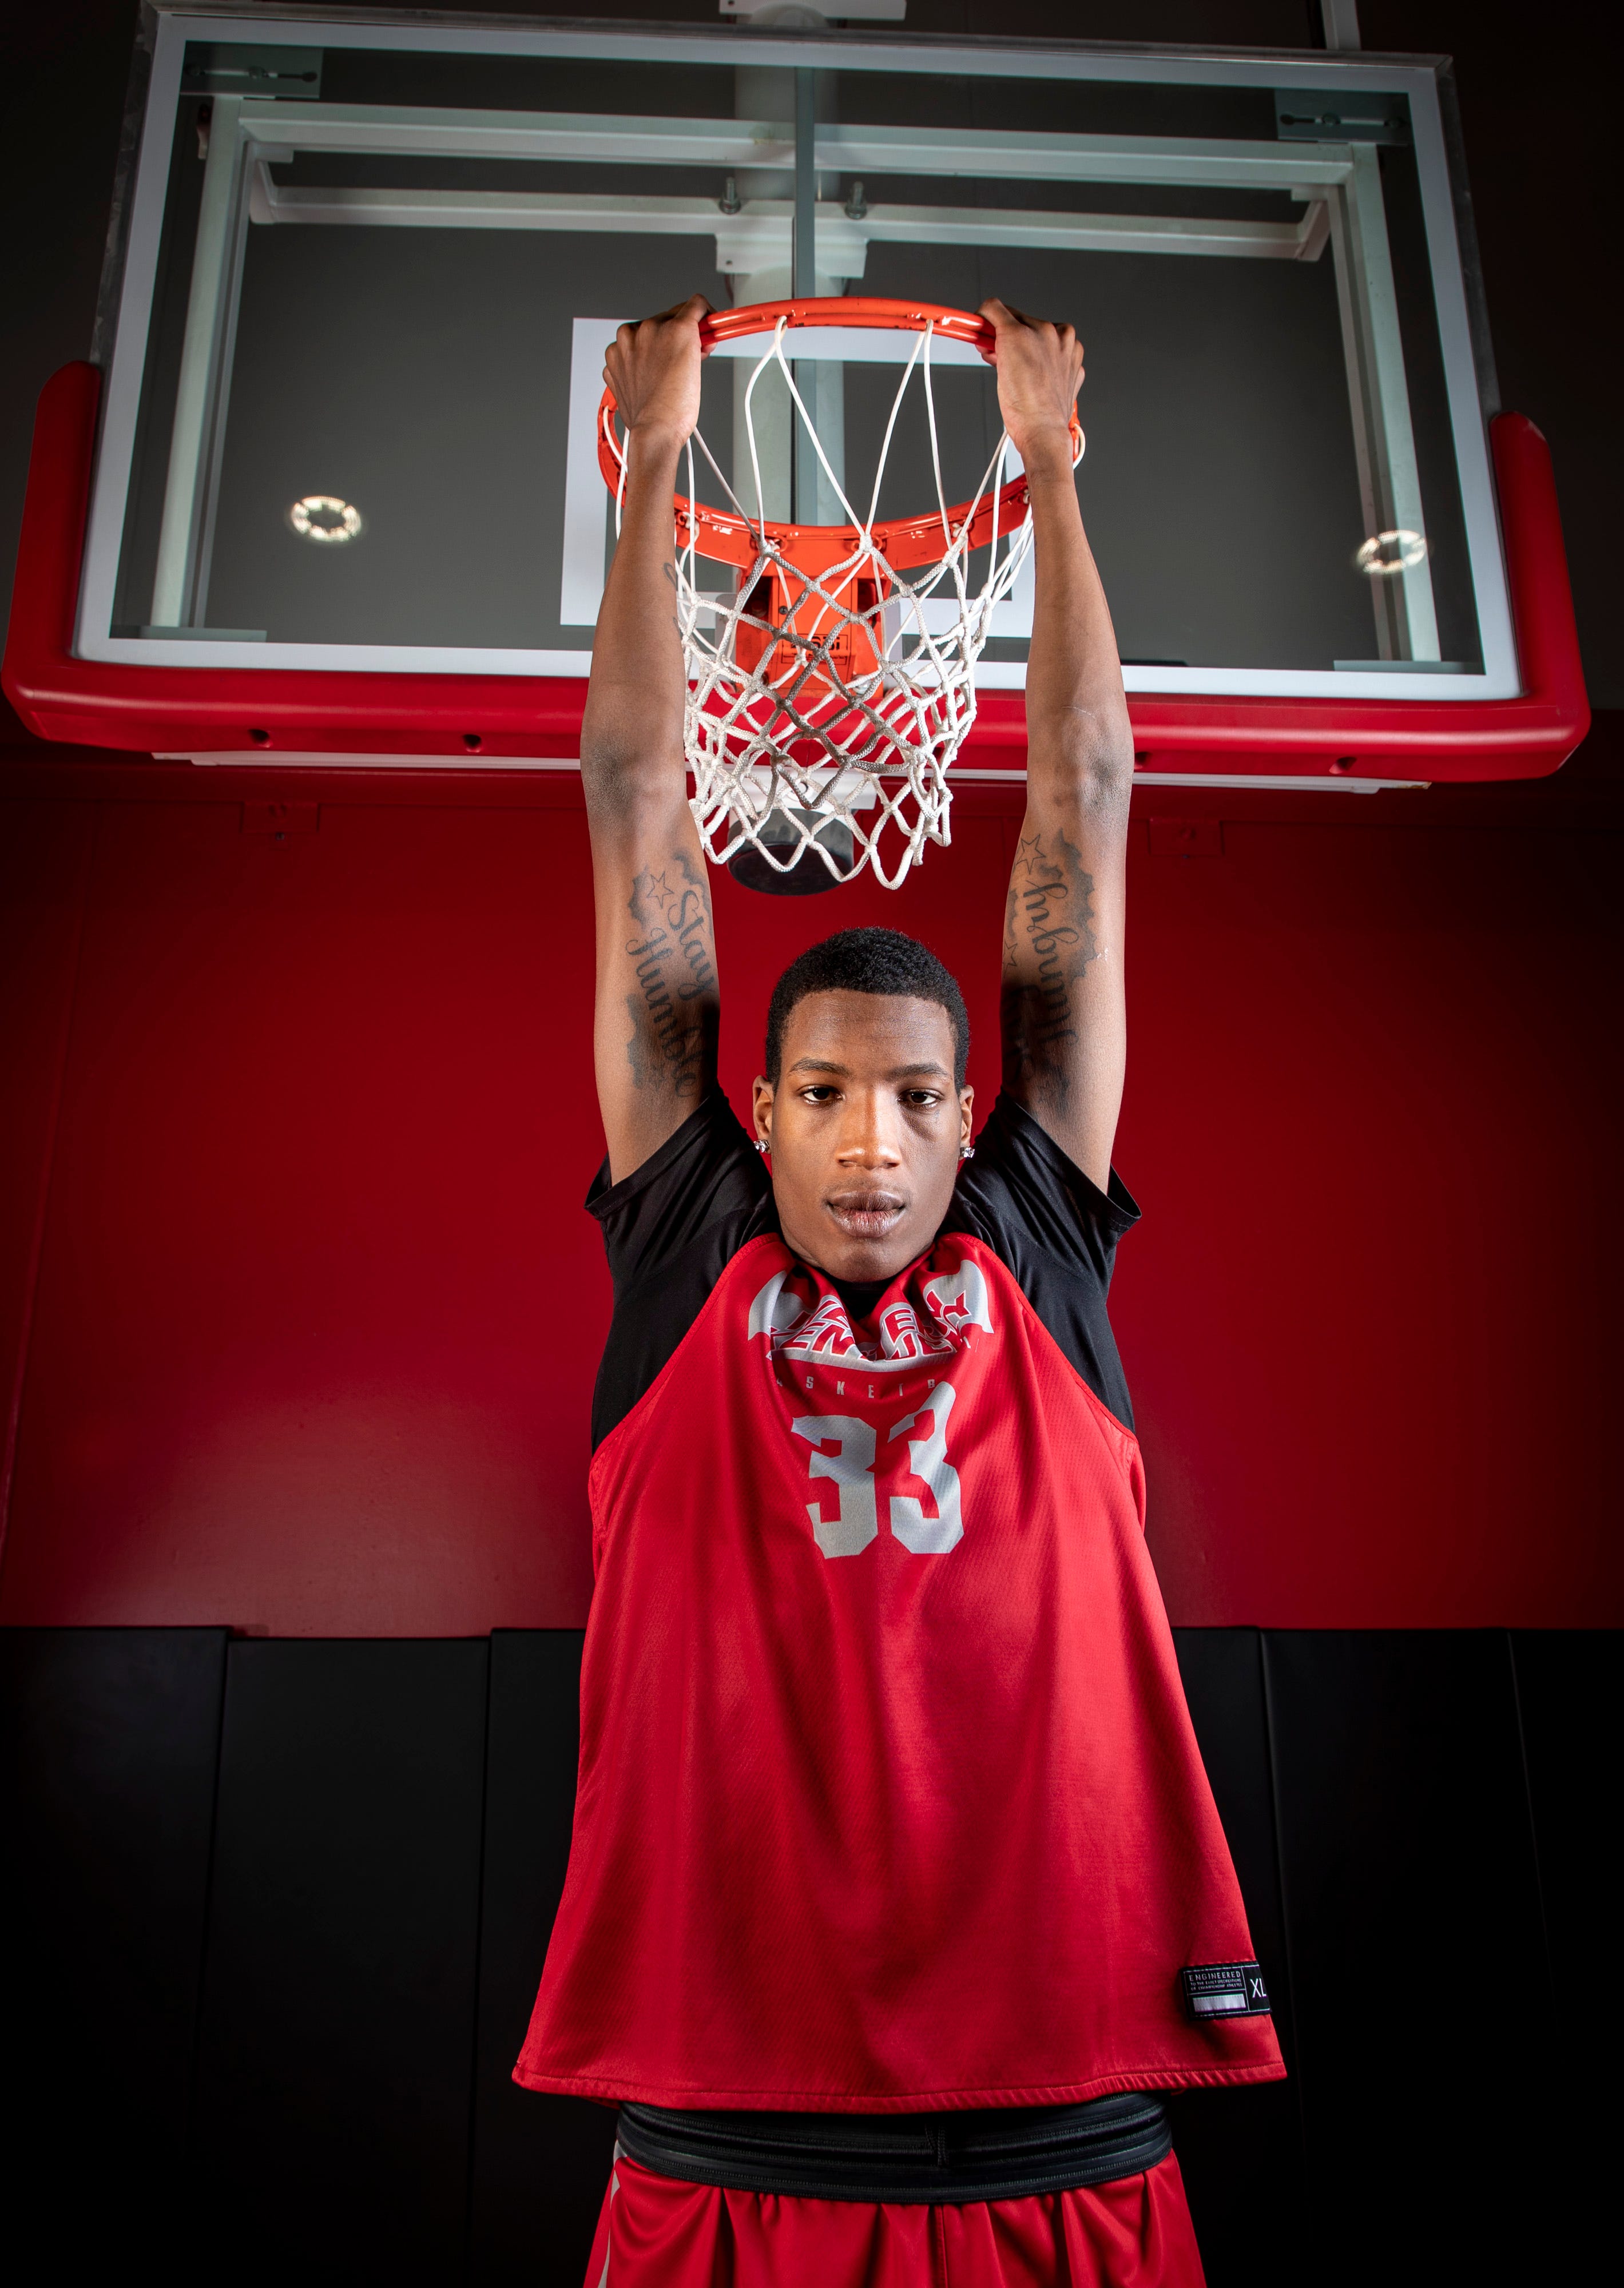 7'5, WKU's Jamarion Sharp is the tallest player DI basketball